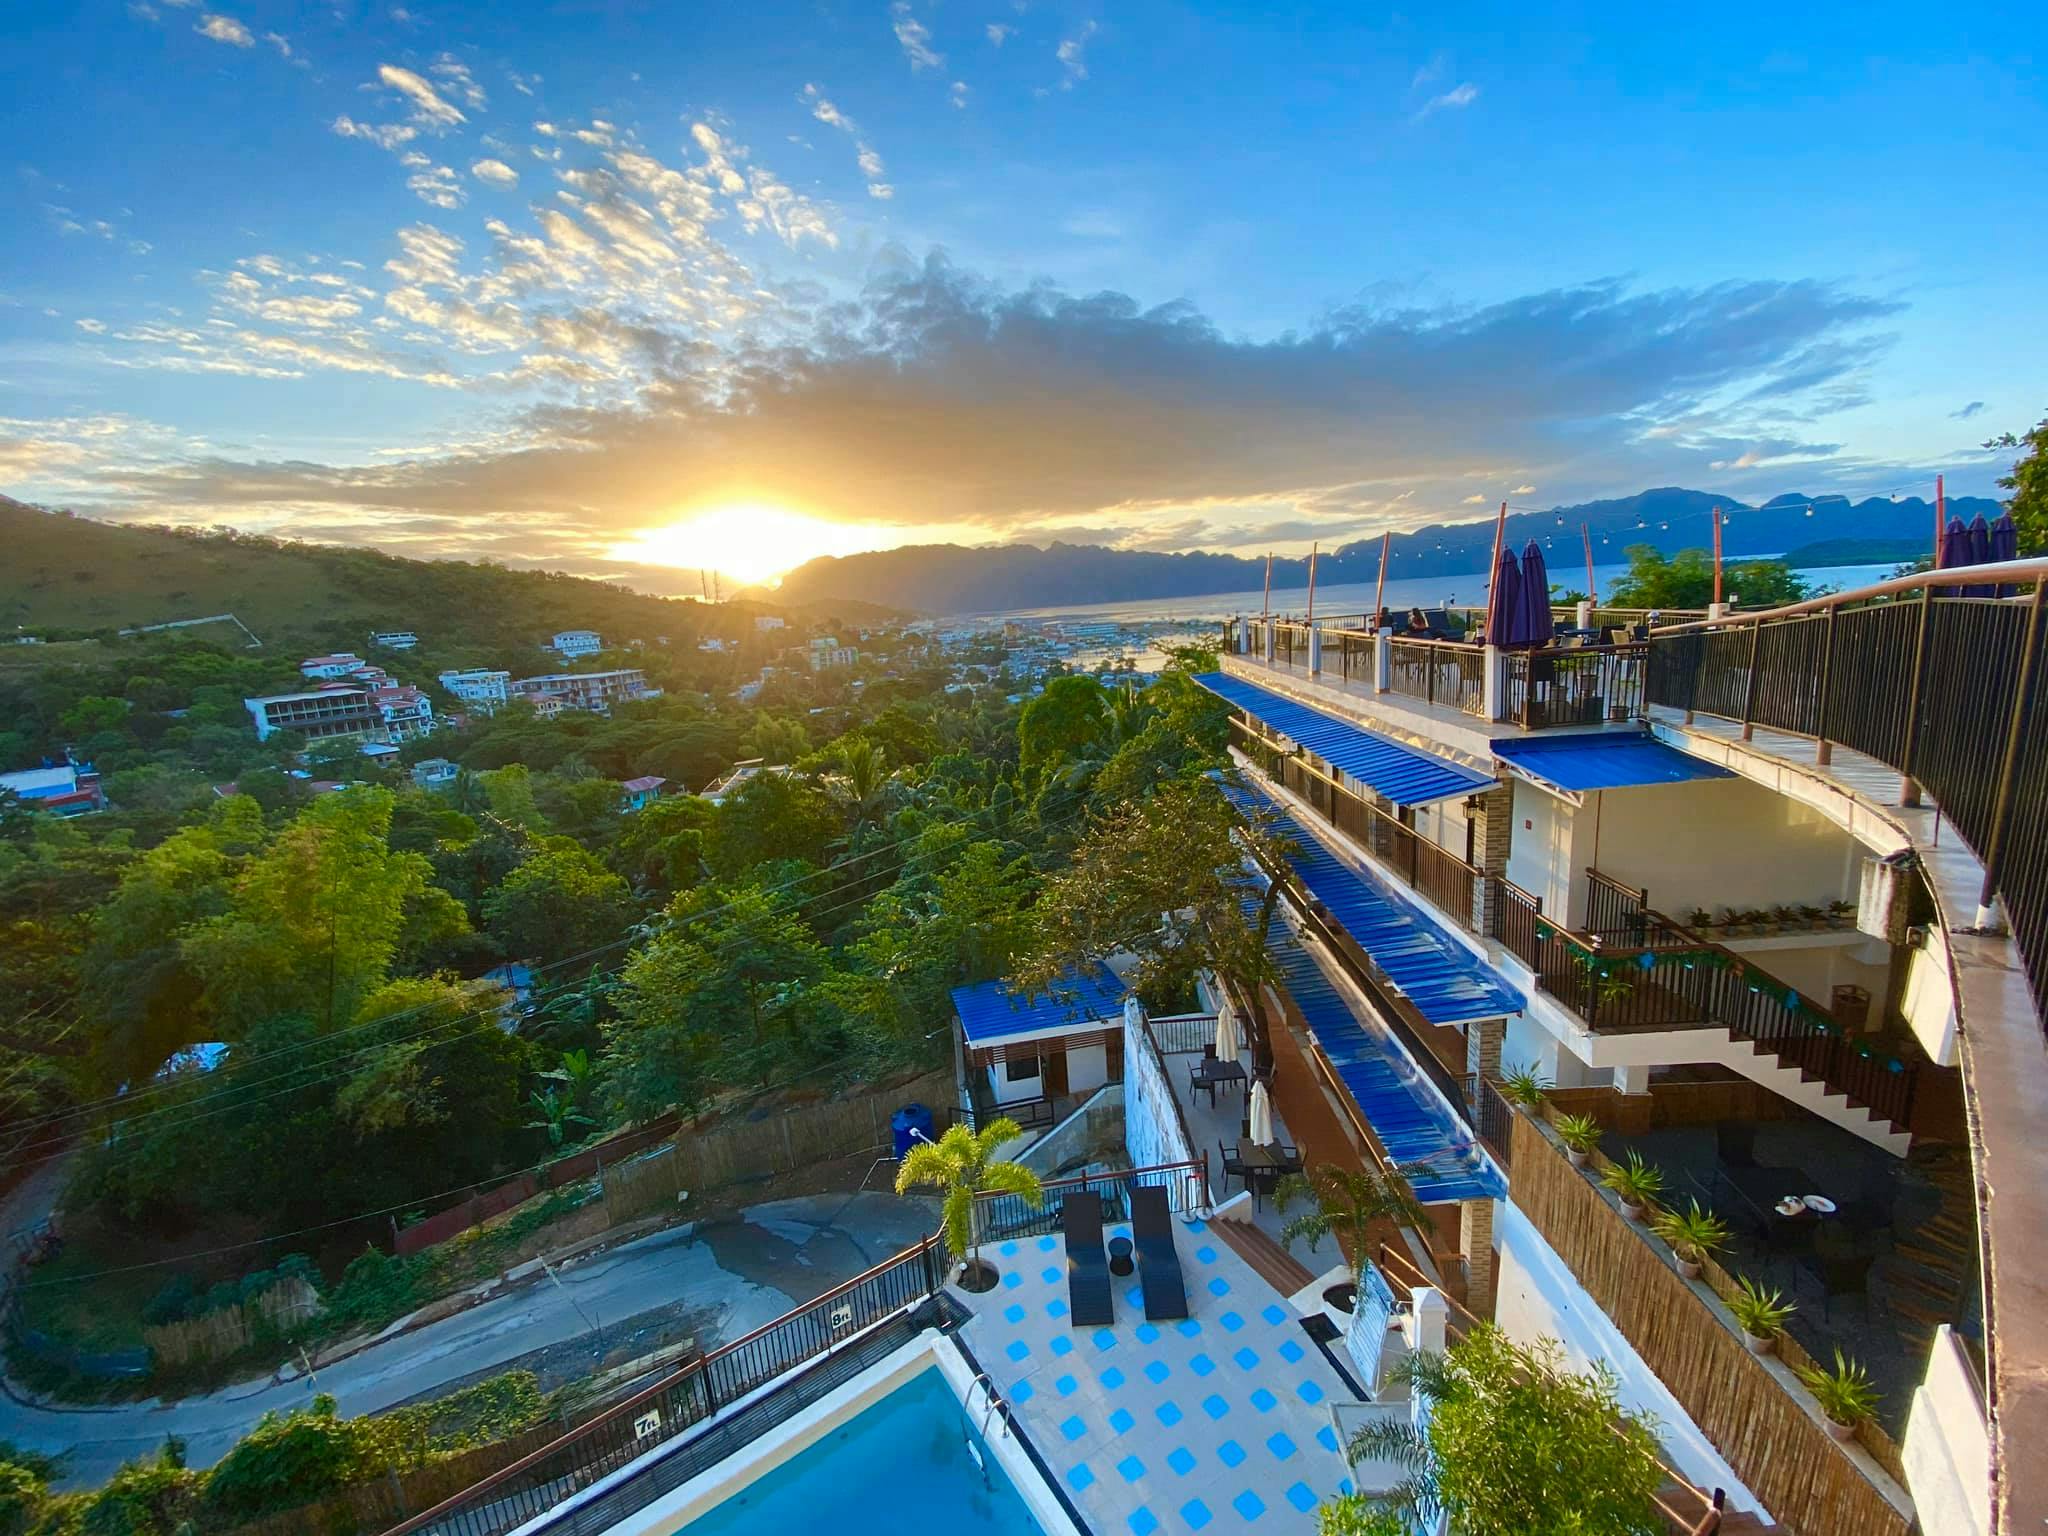 View from Skylodge Resort Coron, Palawan